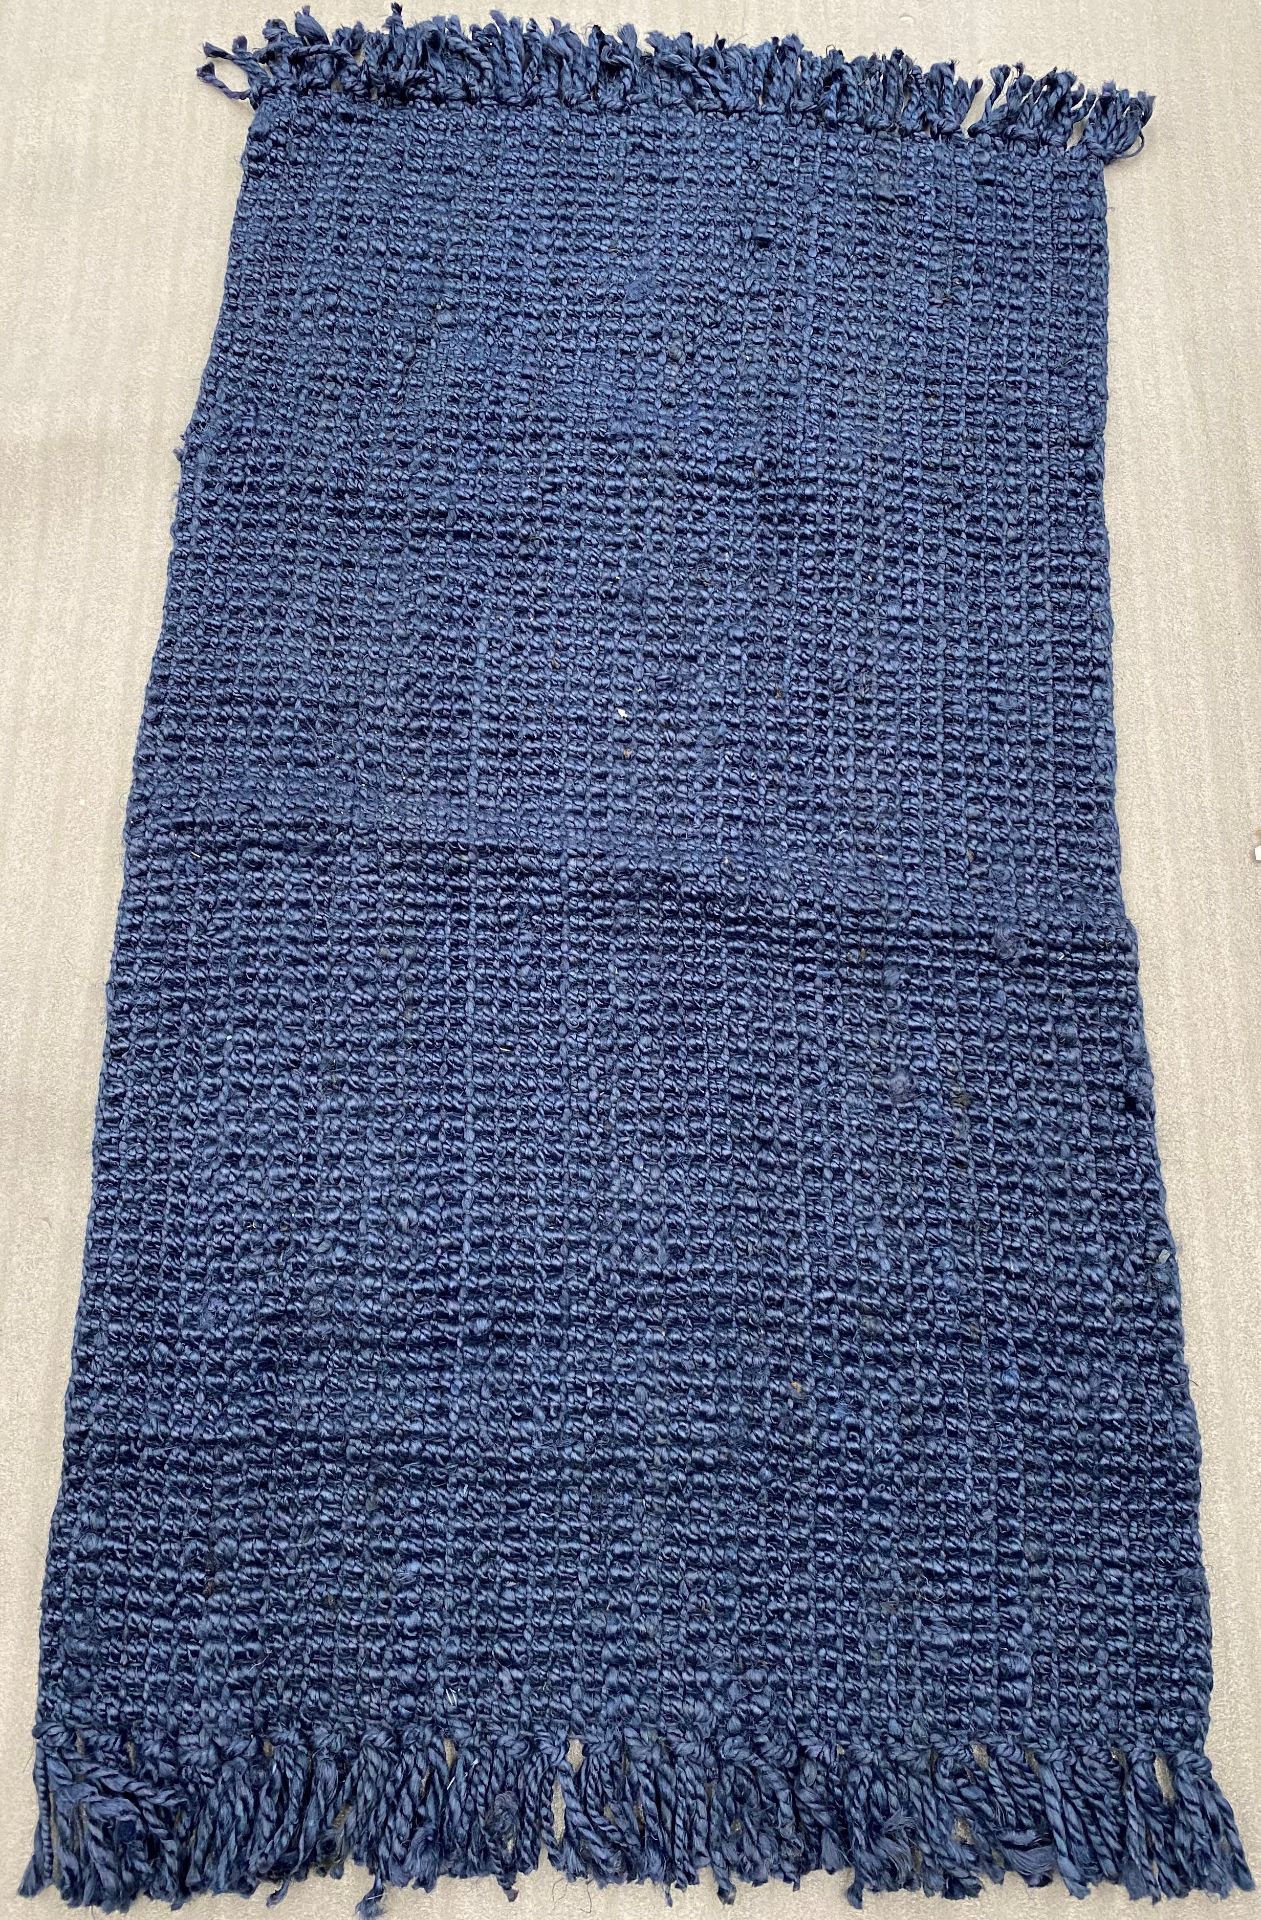 A Woven Blue rug - 170cm x 90cm